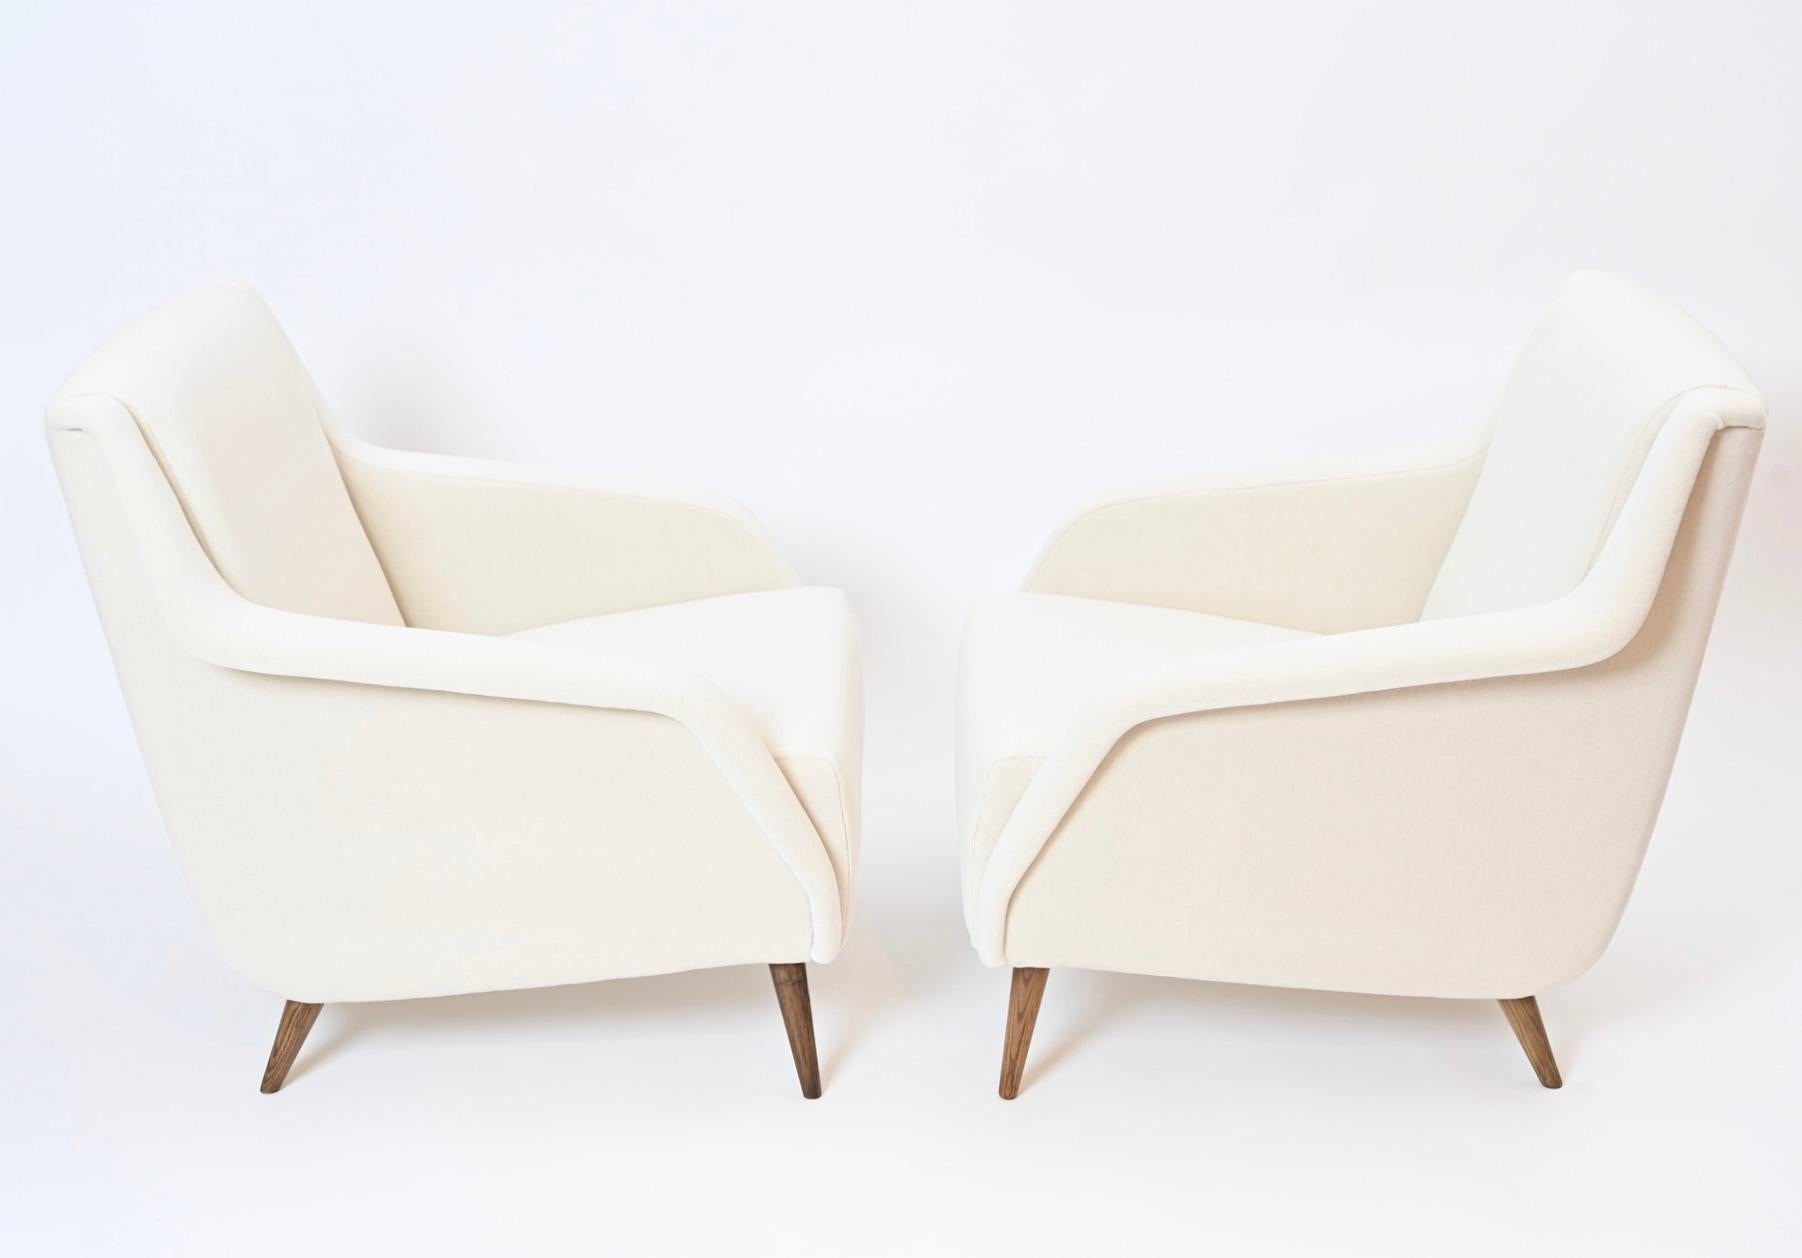 Italian Pair of Carlo de Carli ‘802’ Lounge Chairs by Cassina, Italy, circa 1960